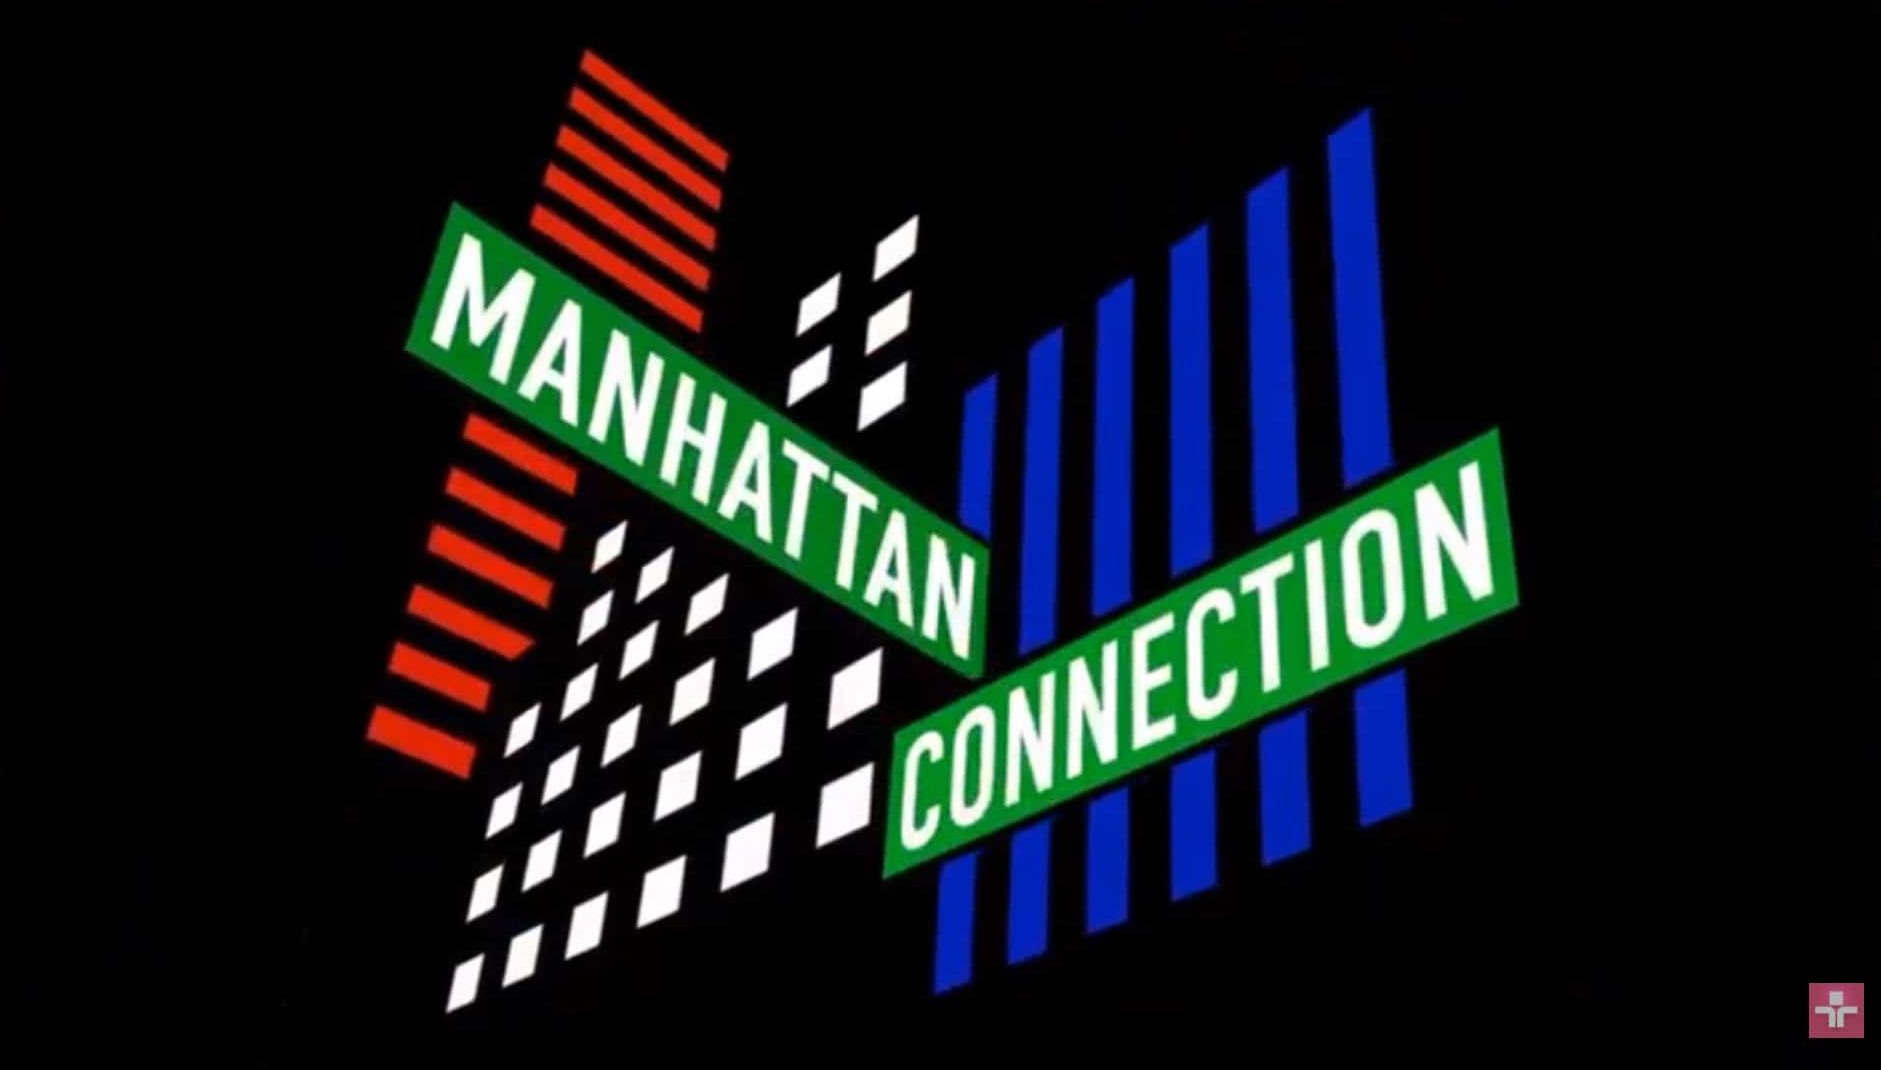 Manhattan Connection volta ao ar na web após deixar a TV Cultura